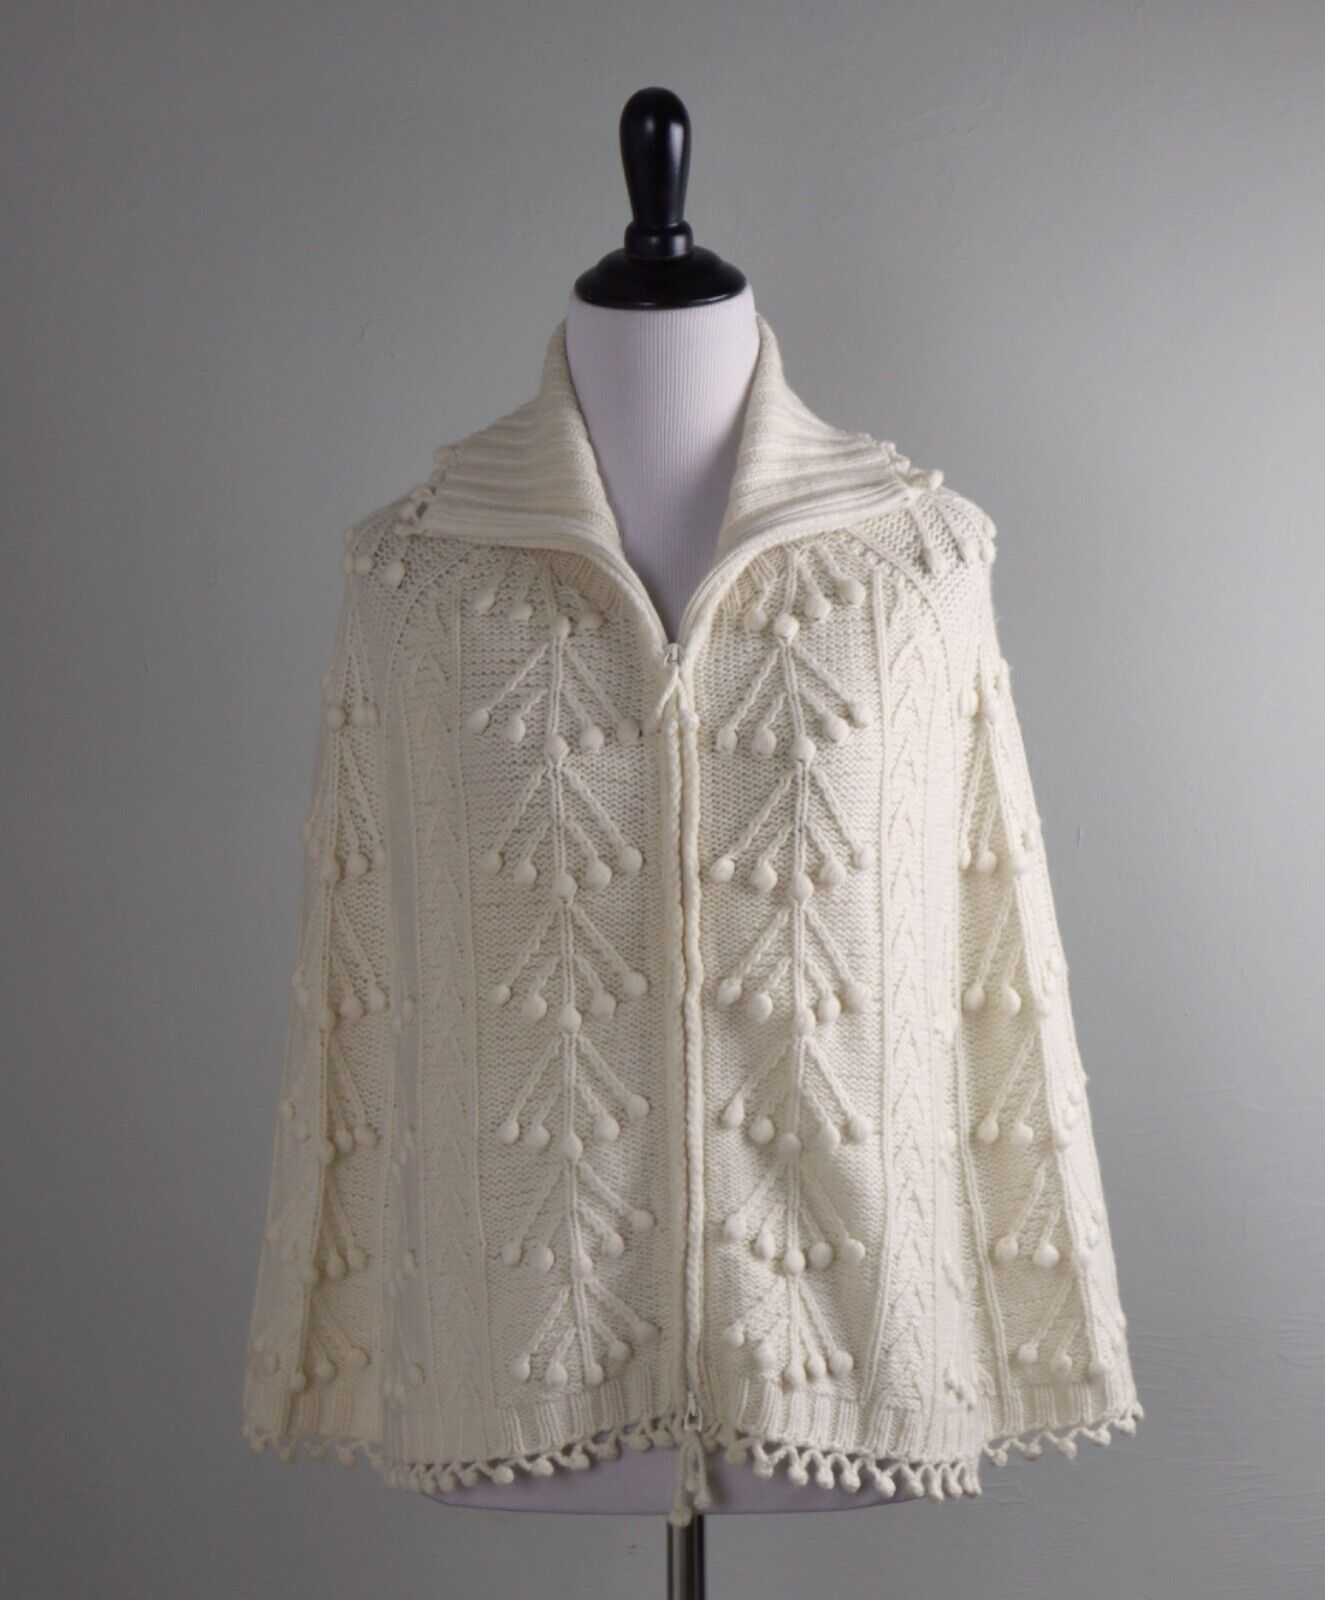 PER SE Carlisle $395 Wool Cashmere Pom Pom Cape Shawl Sweater Top Size Small